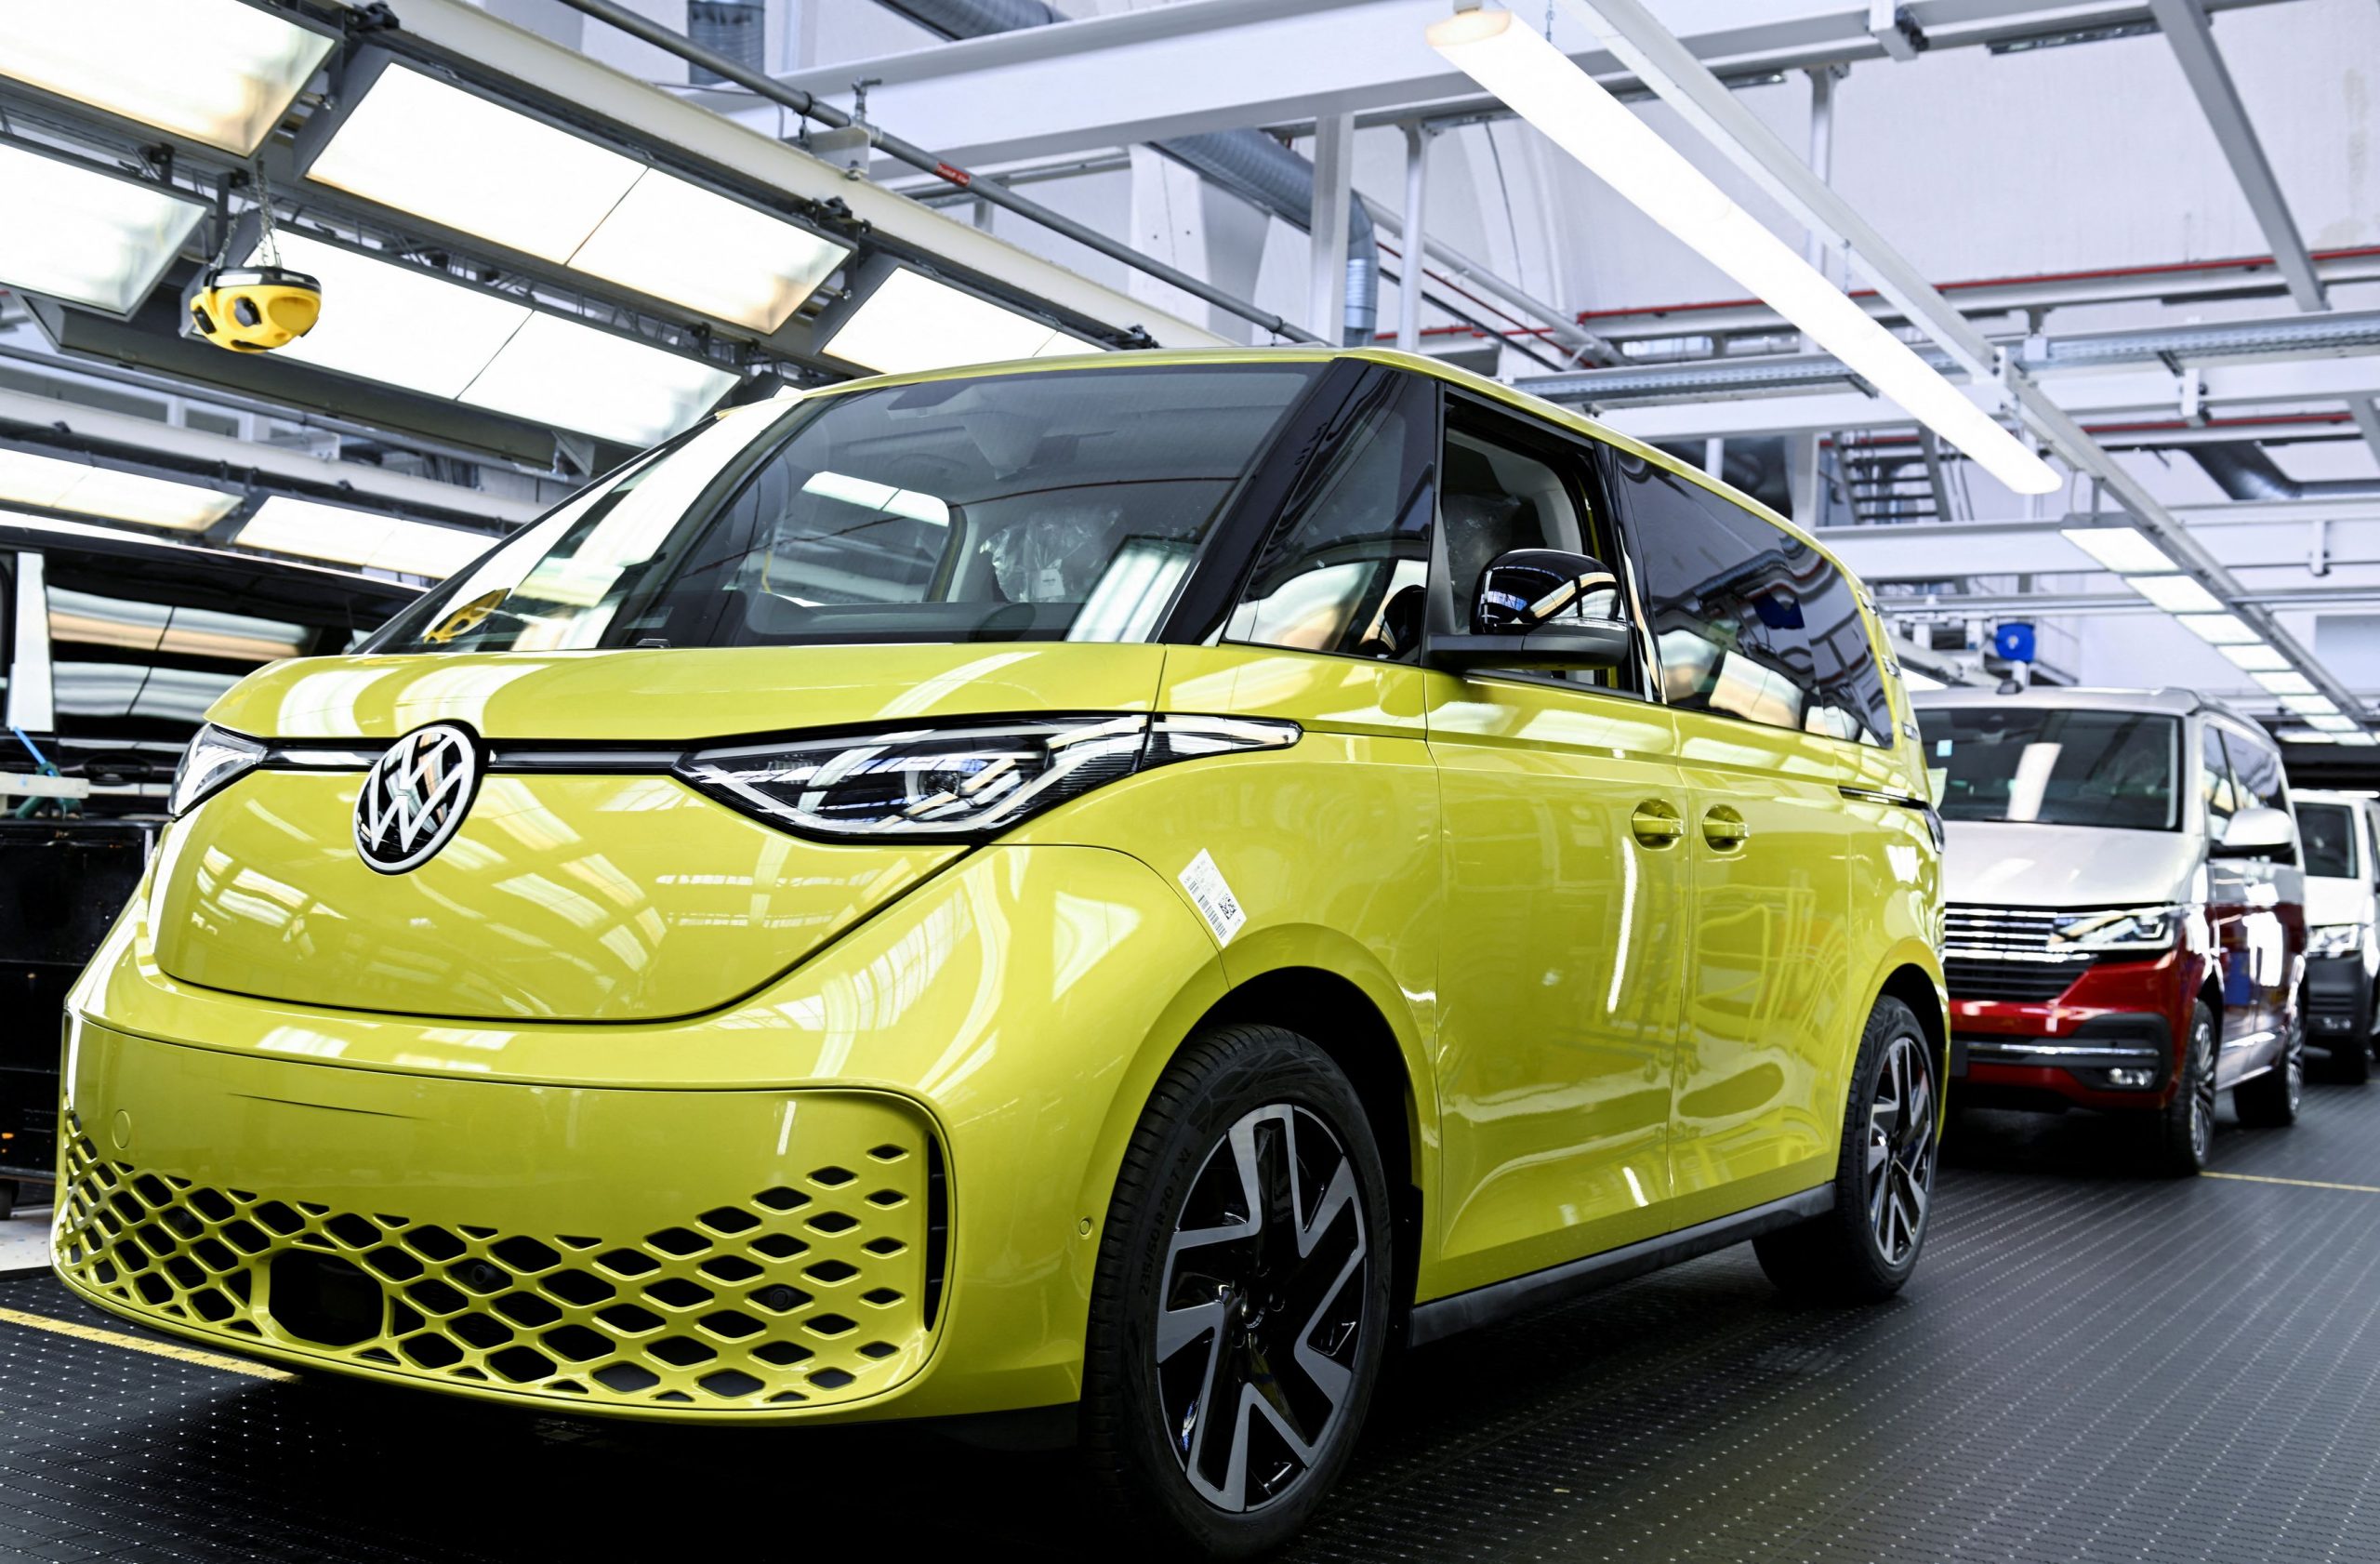 VW: Αισιοδοξία για μείωση του χρόνου παράδοσης ηλεκτρικών οχημάτων στο 2022